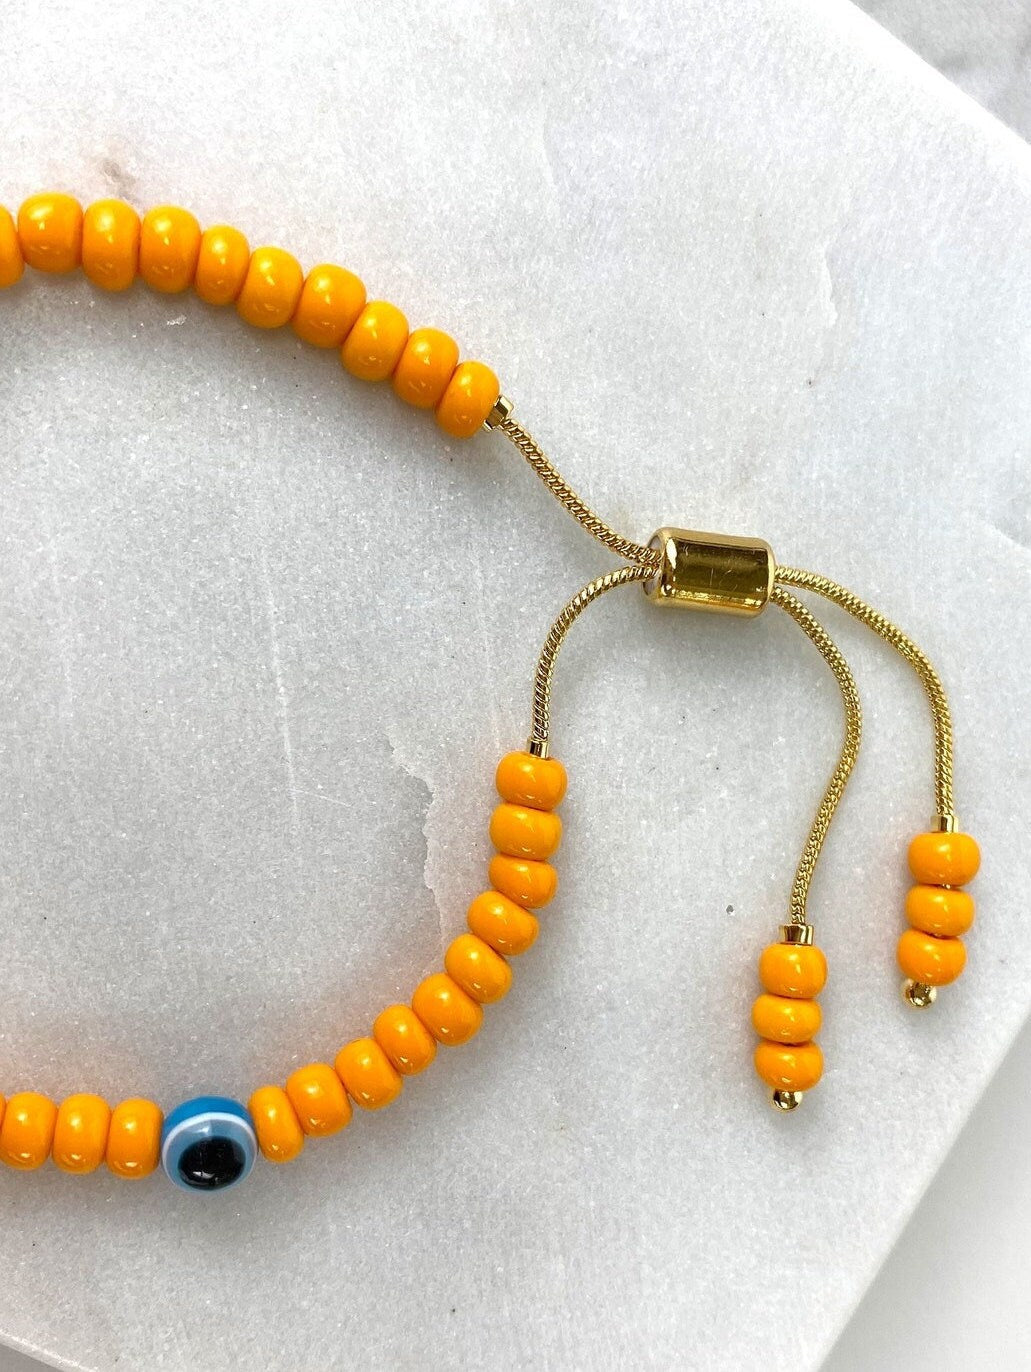 18k Gold Filled 1mm Snake Chain, Orange Beads, Blue Evil Eyes, Colored Adjustable Bracelet Wholesale Jewelry Supplies